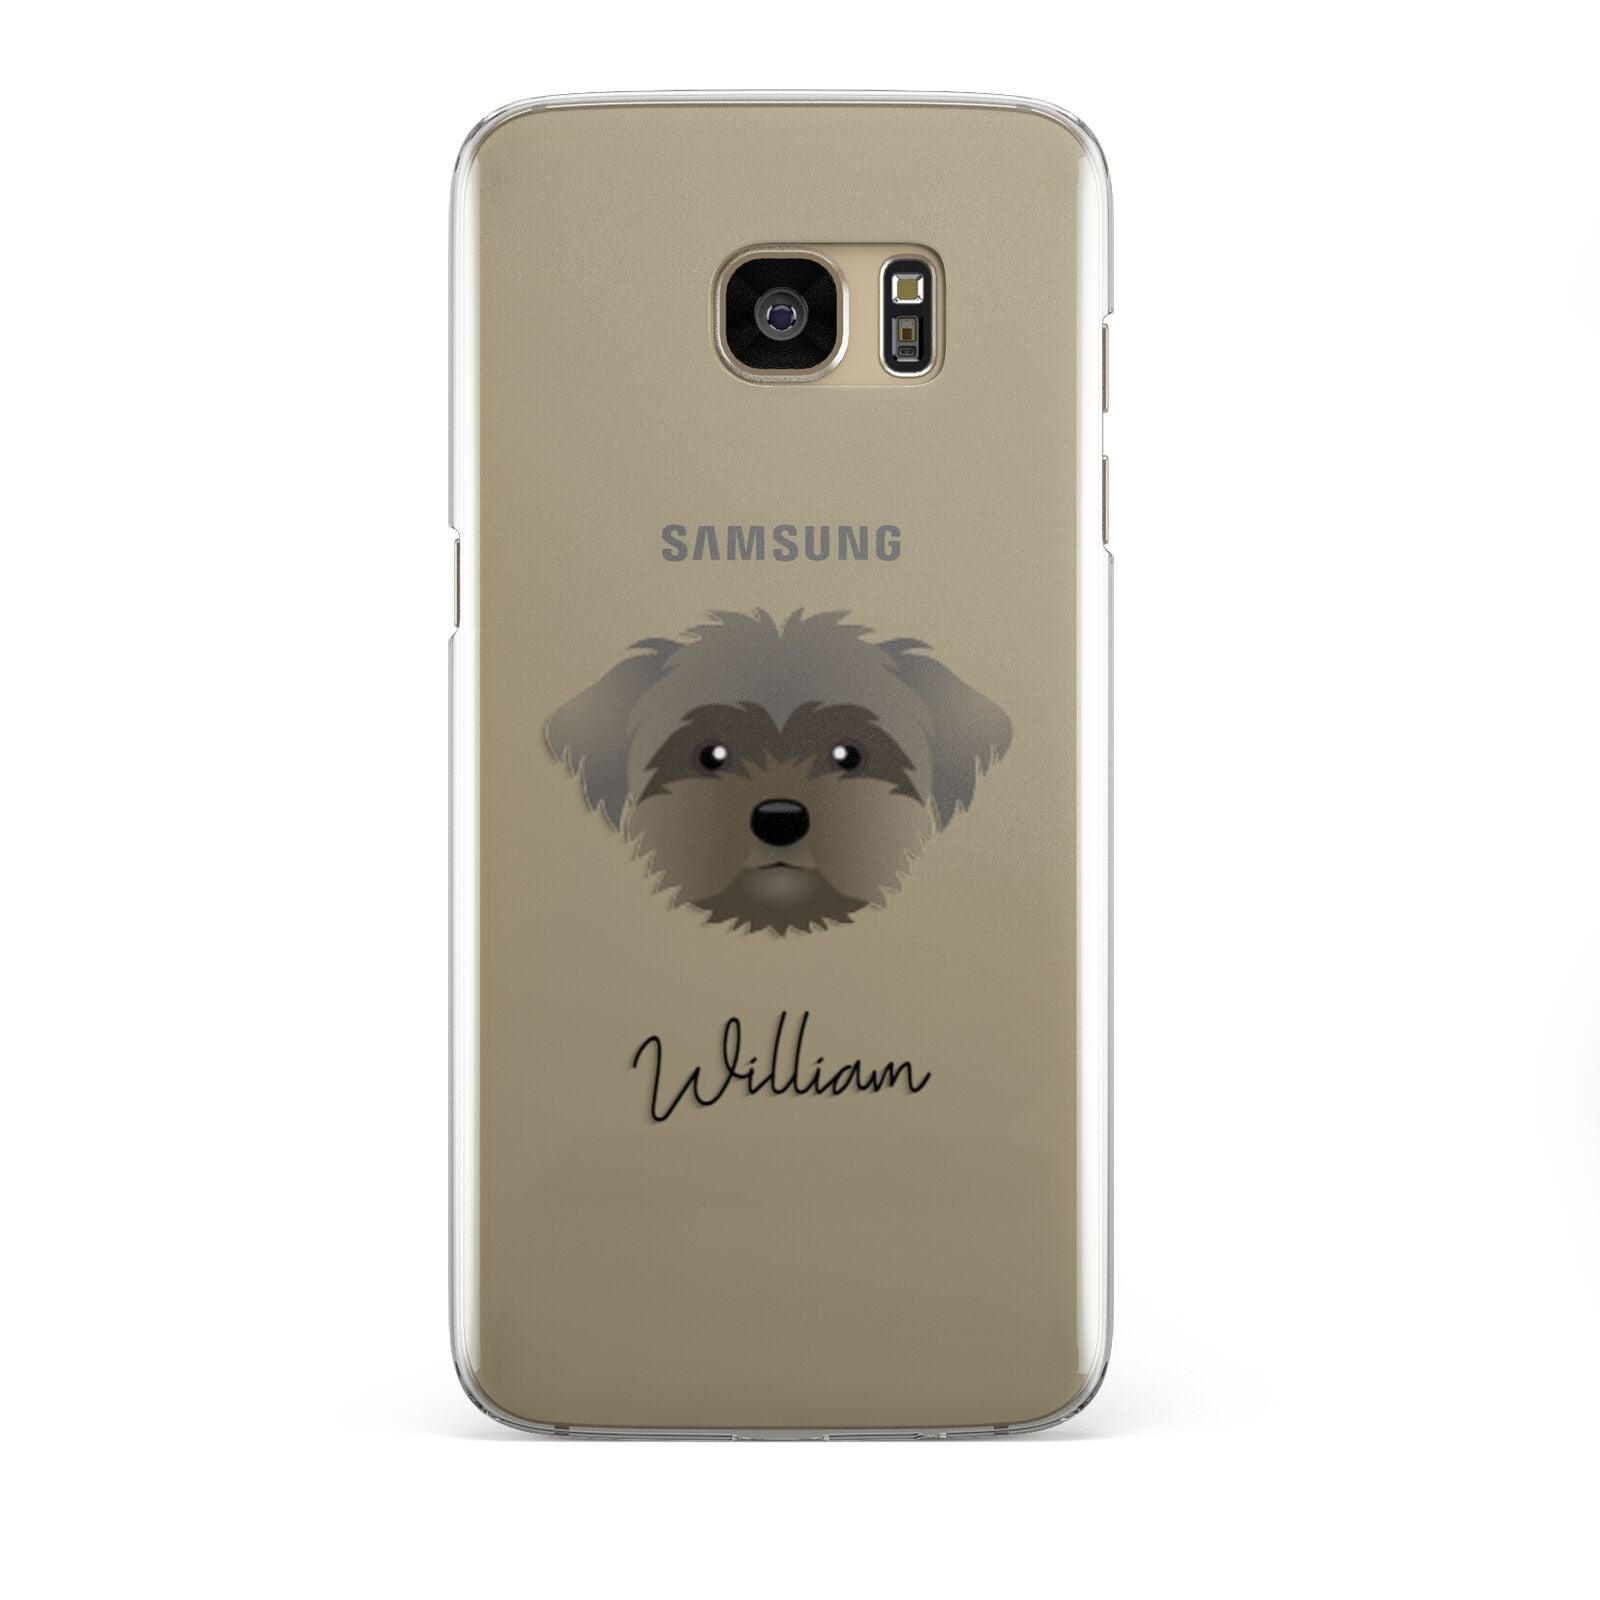 Peek a poo Personalised Samsung Galaxy S7 Edge Case